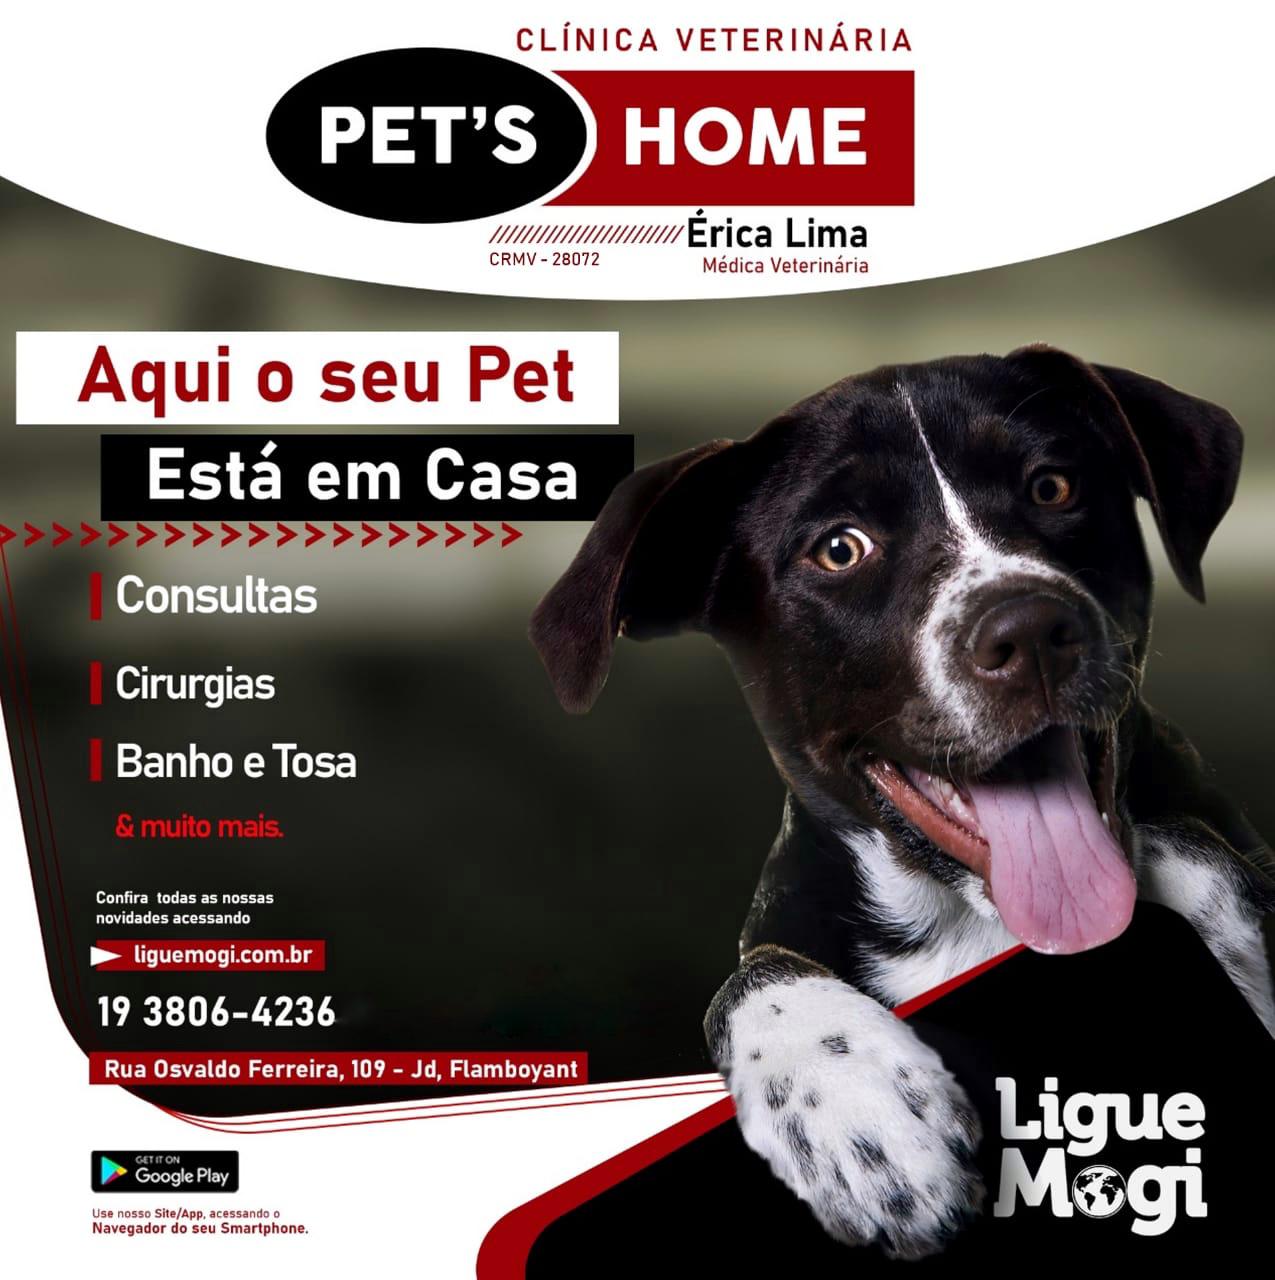 Capa Pets Home - Clínica Veterinária  - Mogi Mirim